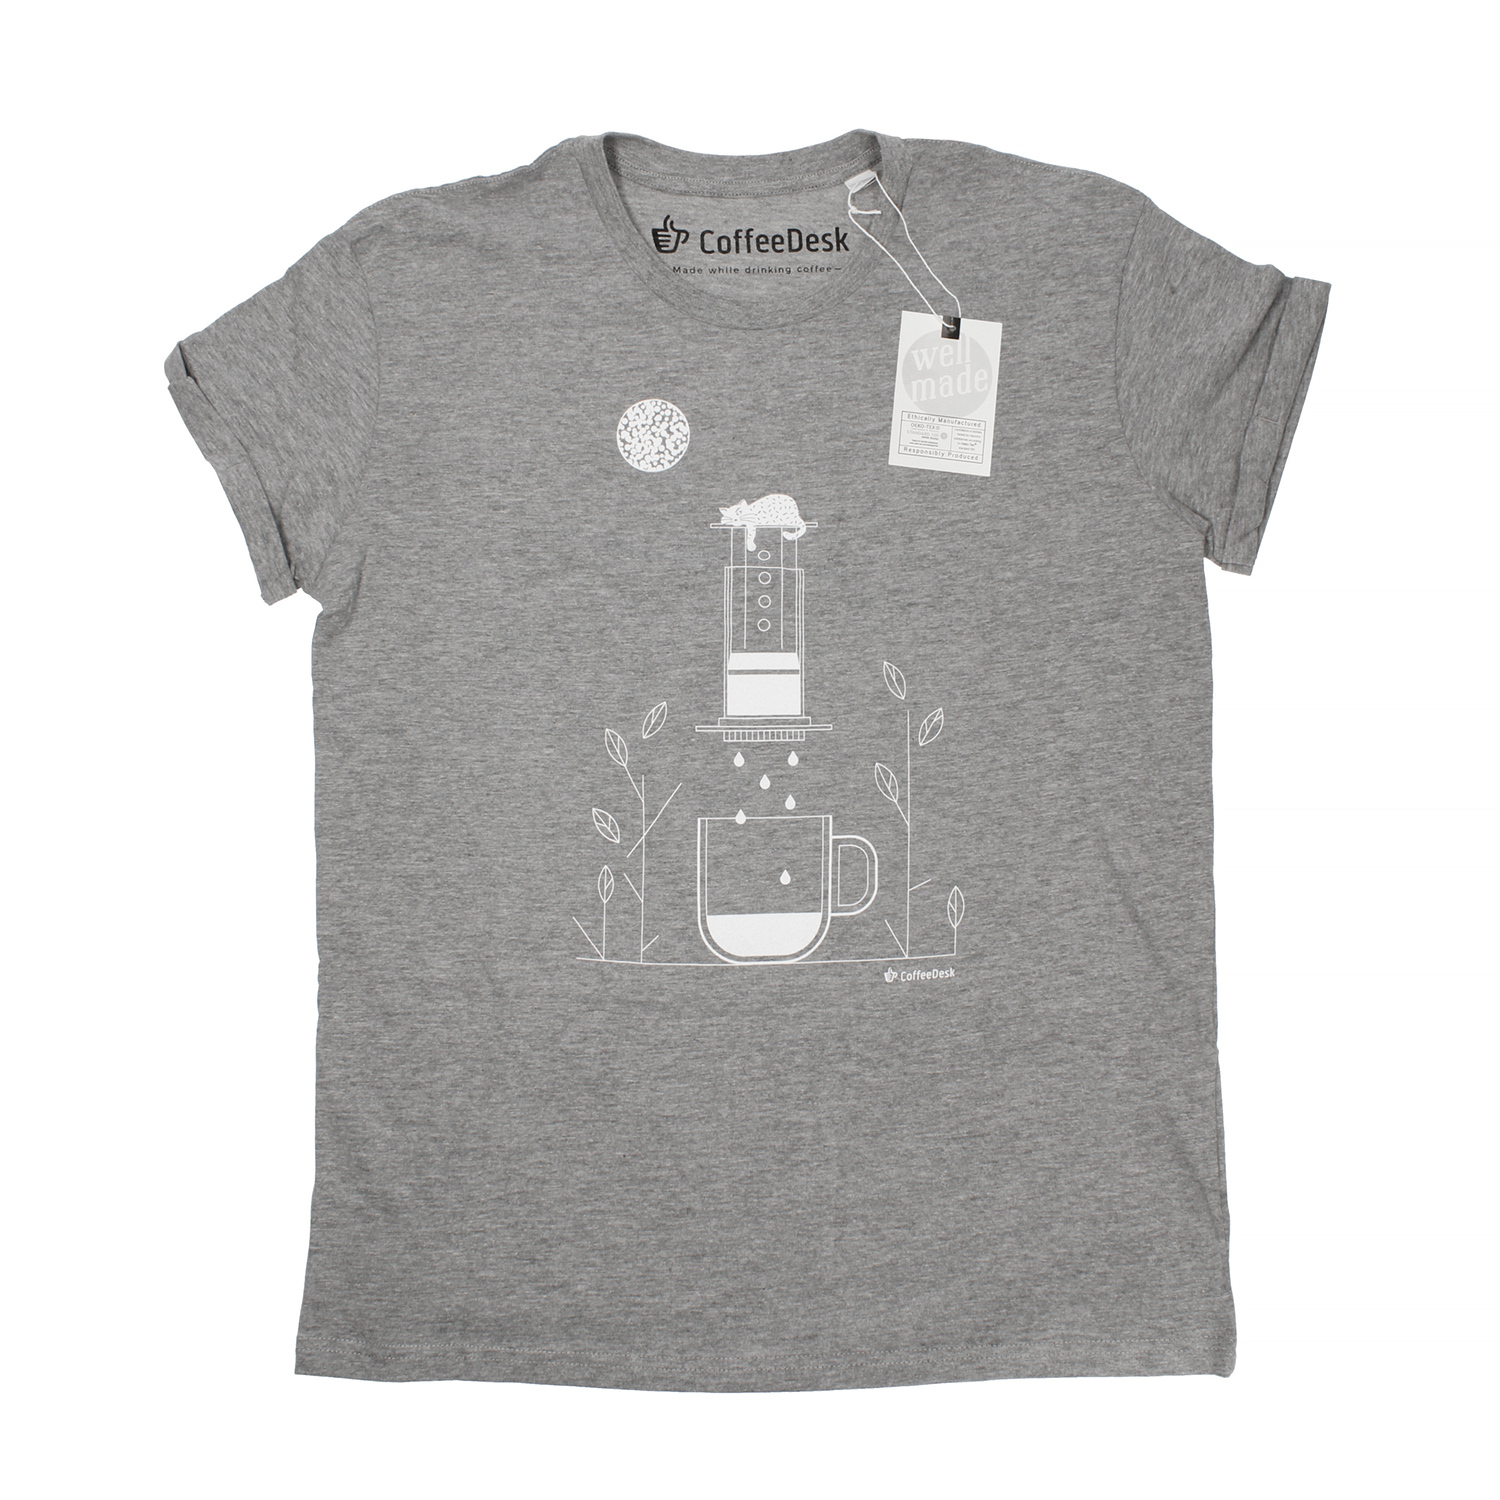 Coffeedesk AeroPress Men's Grey T-shirt - XL